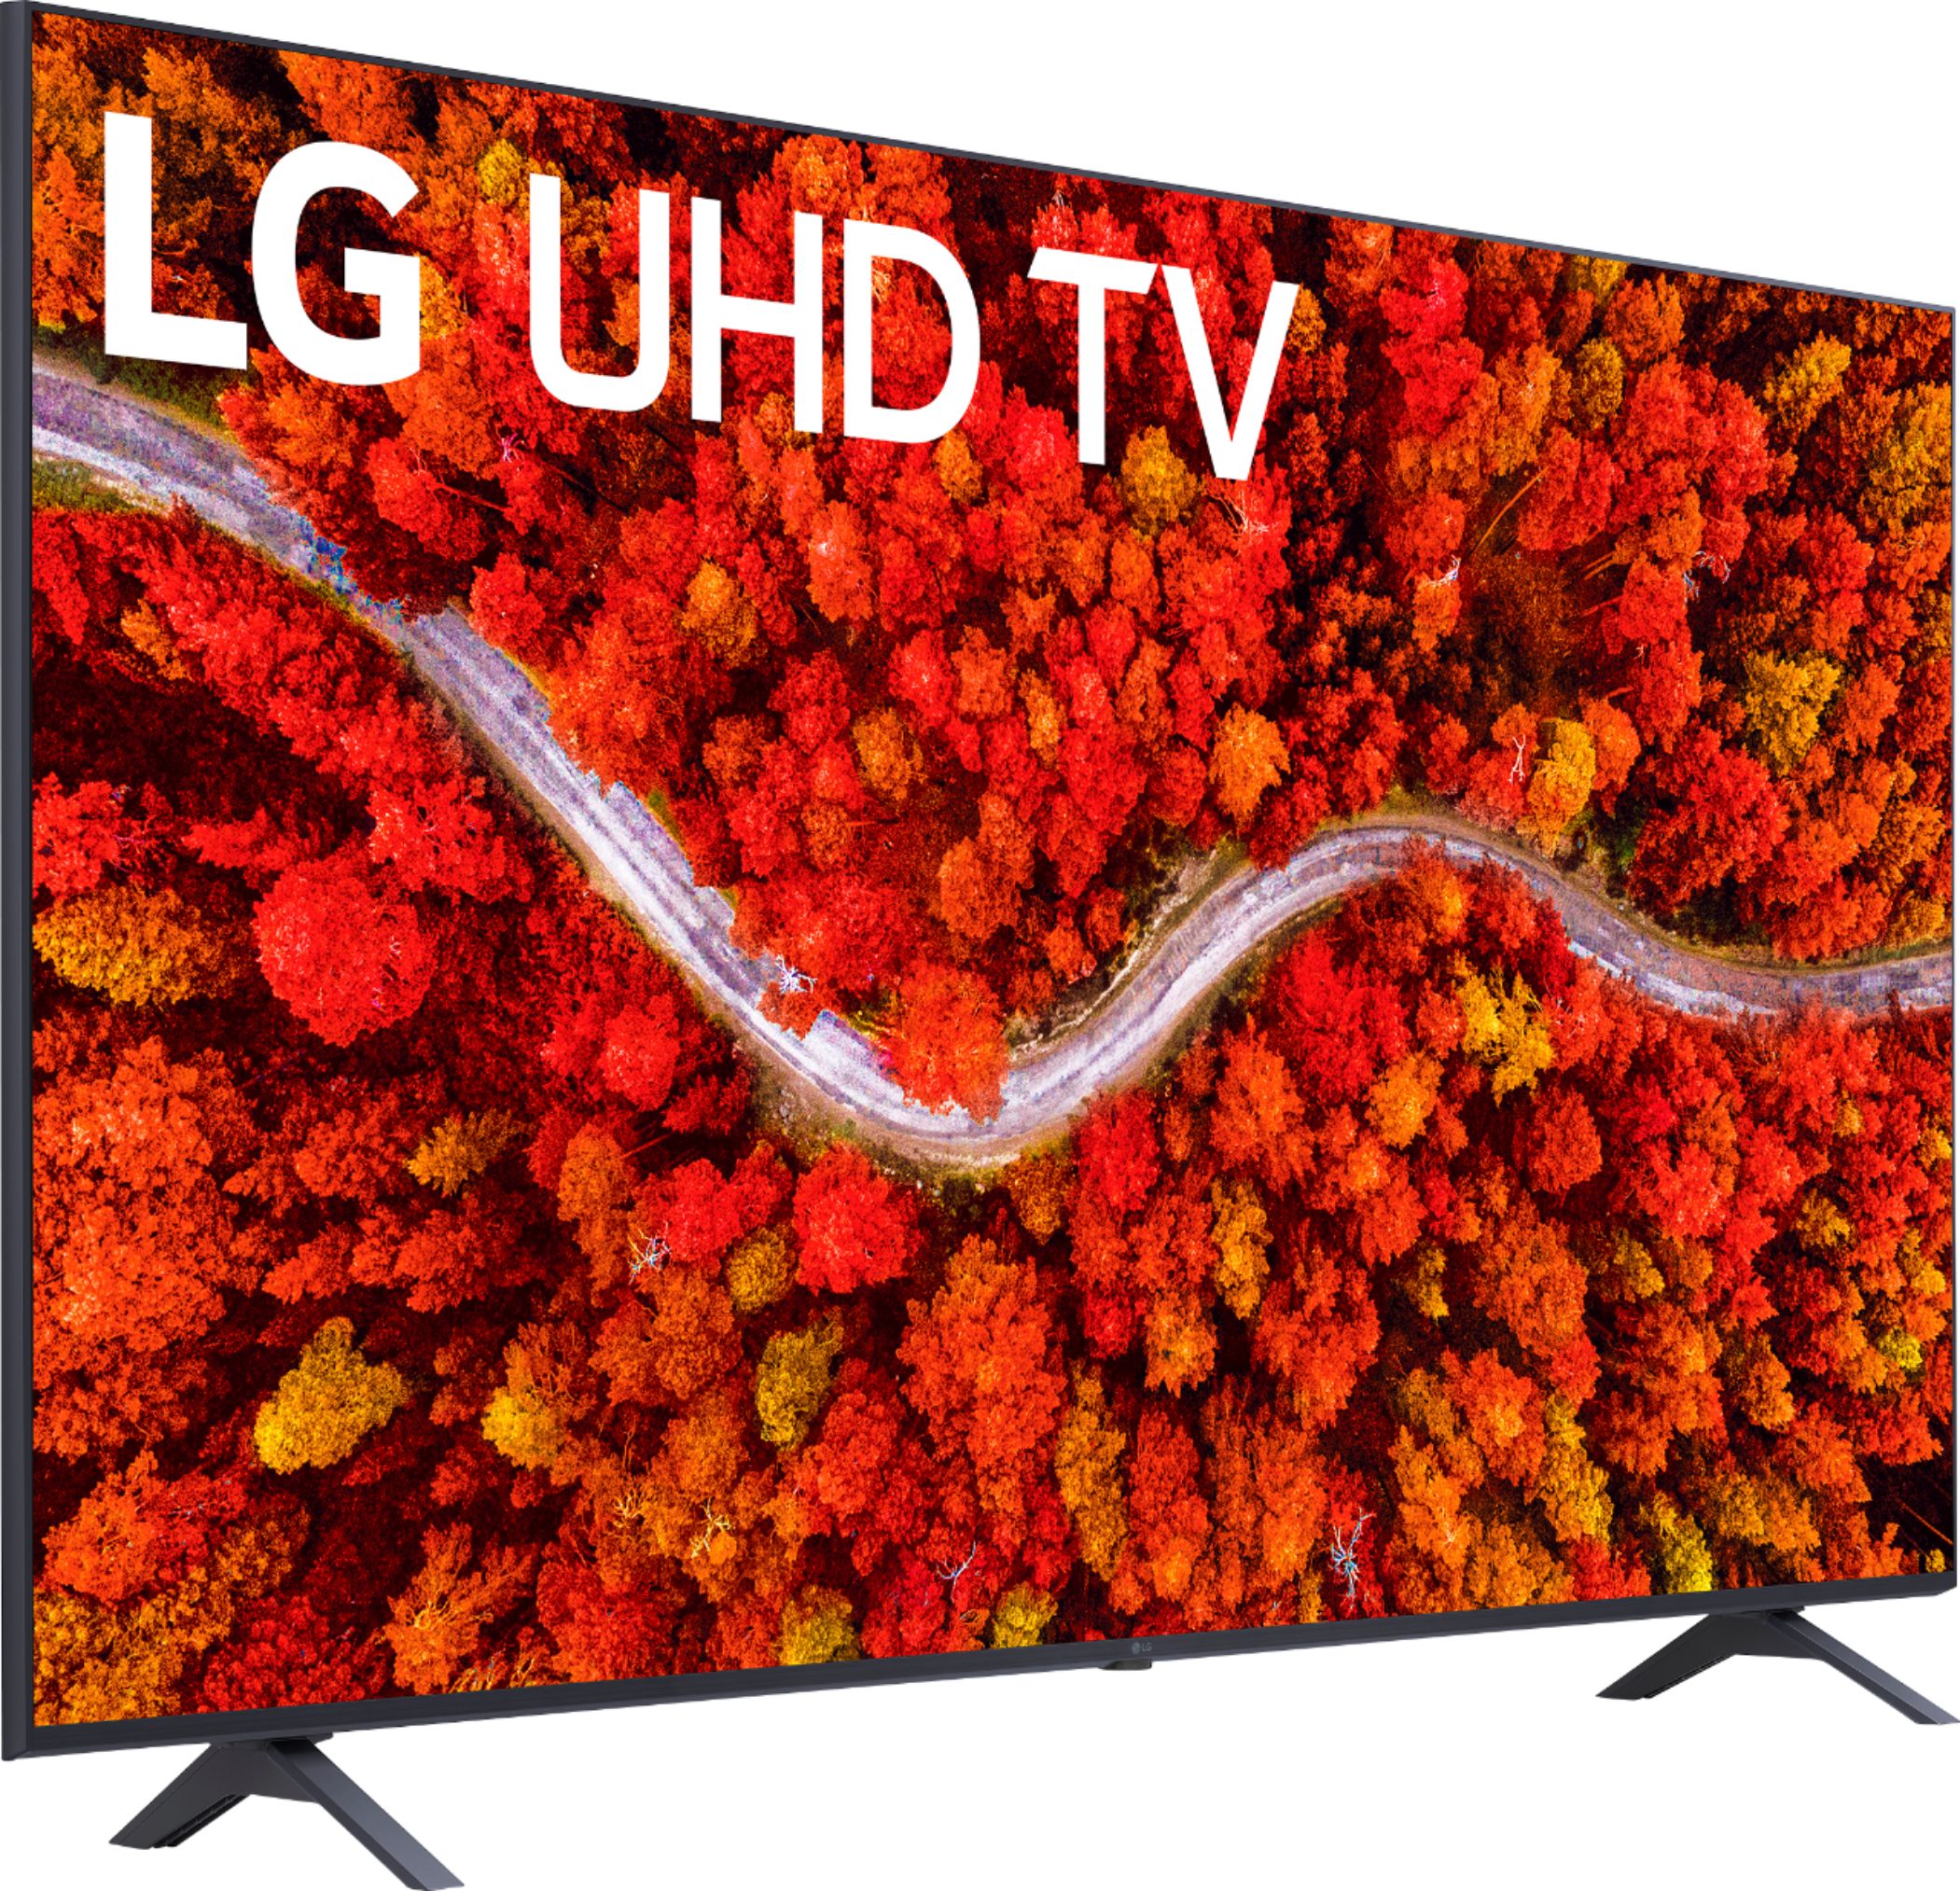 LG 55 Class (55 Diag.) LED-LCD TV 2160p 120 Hz 4K UHDTV 55UB8200 - Best  Buy